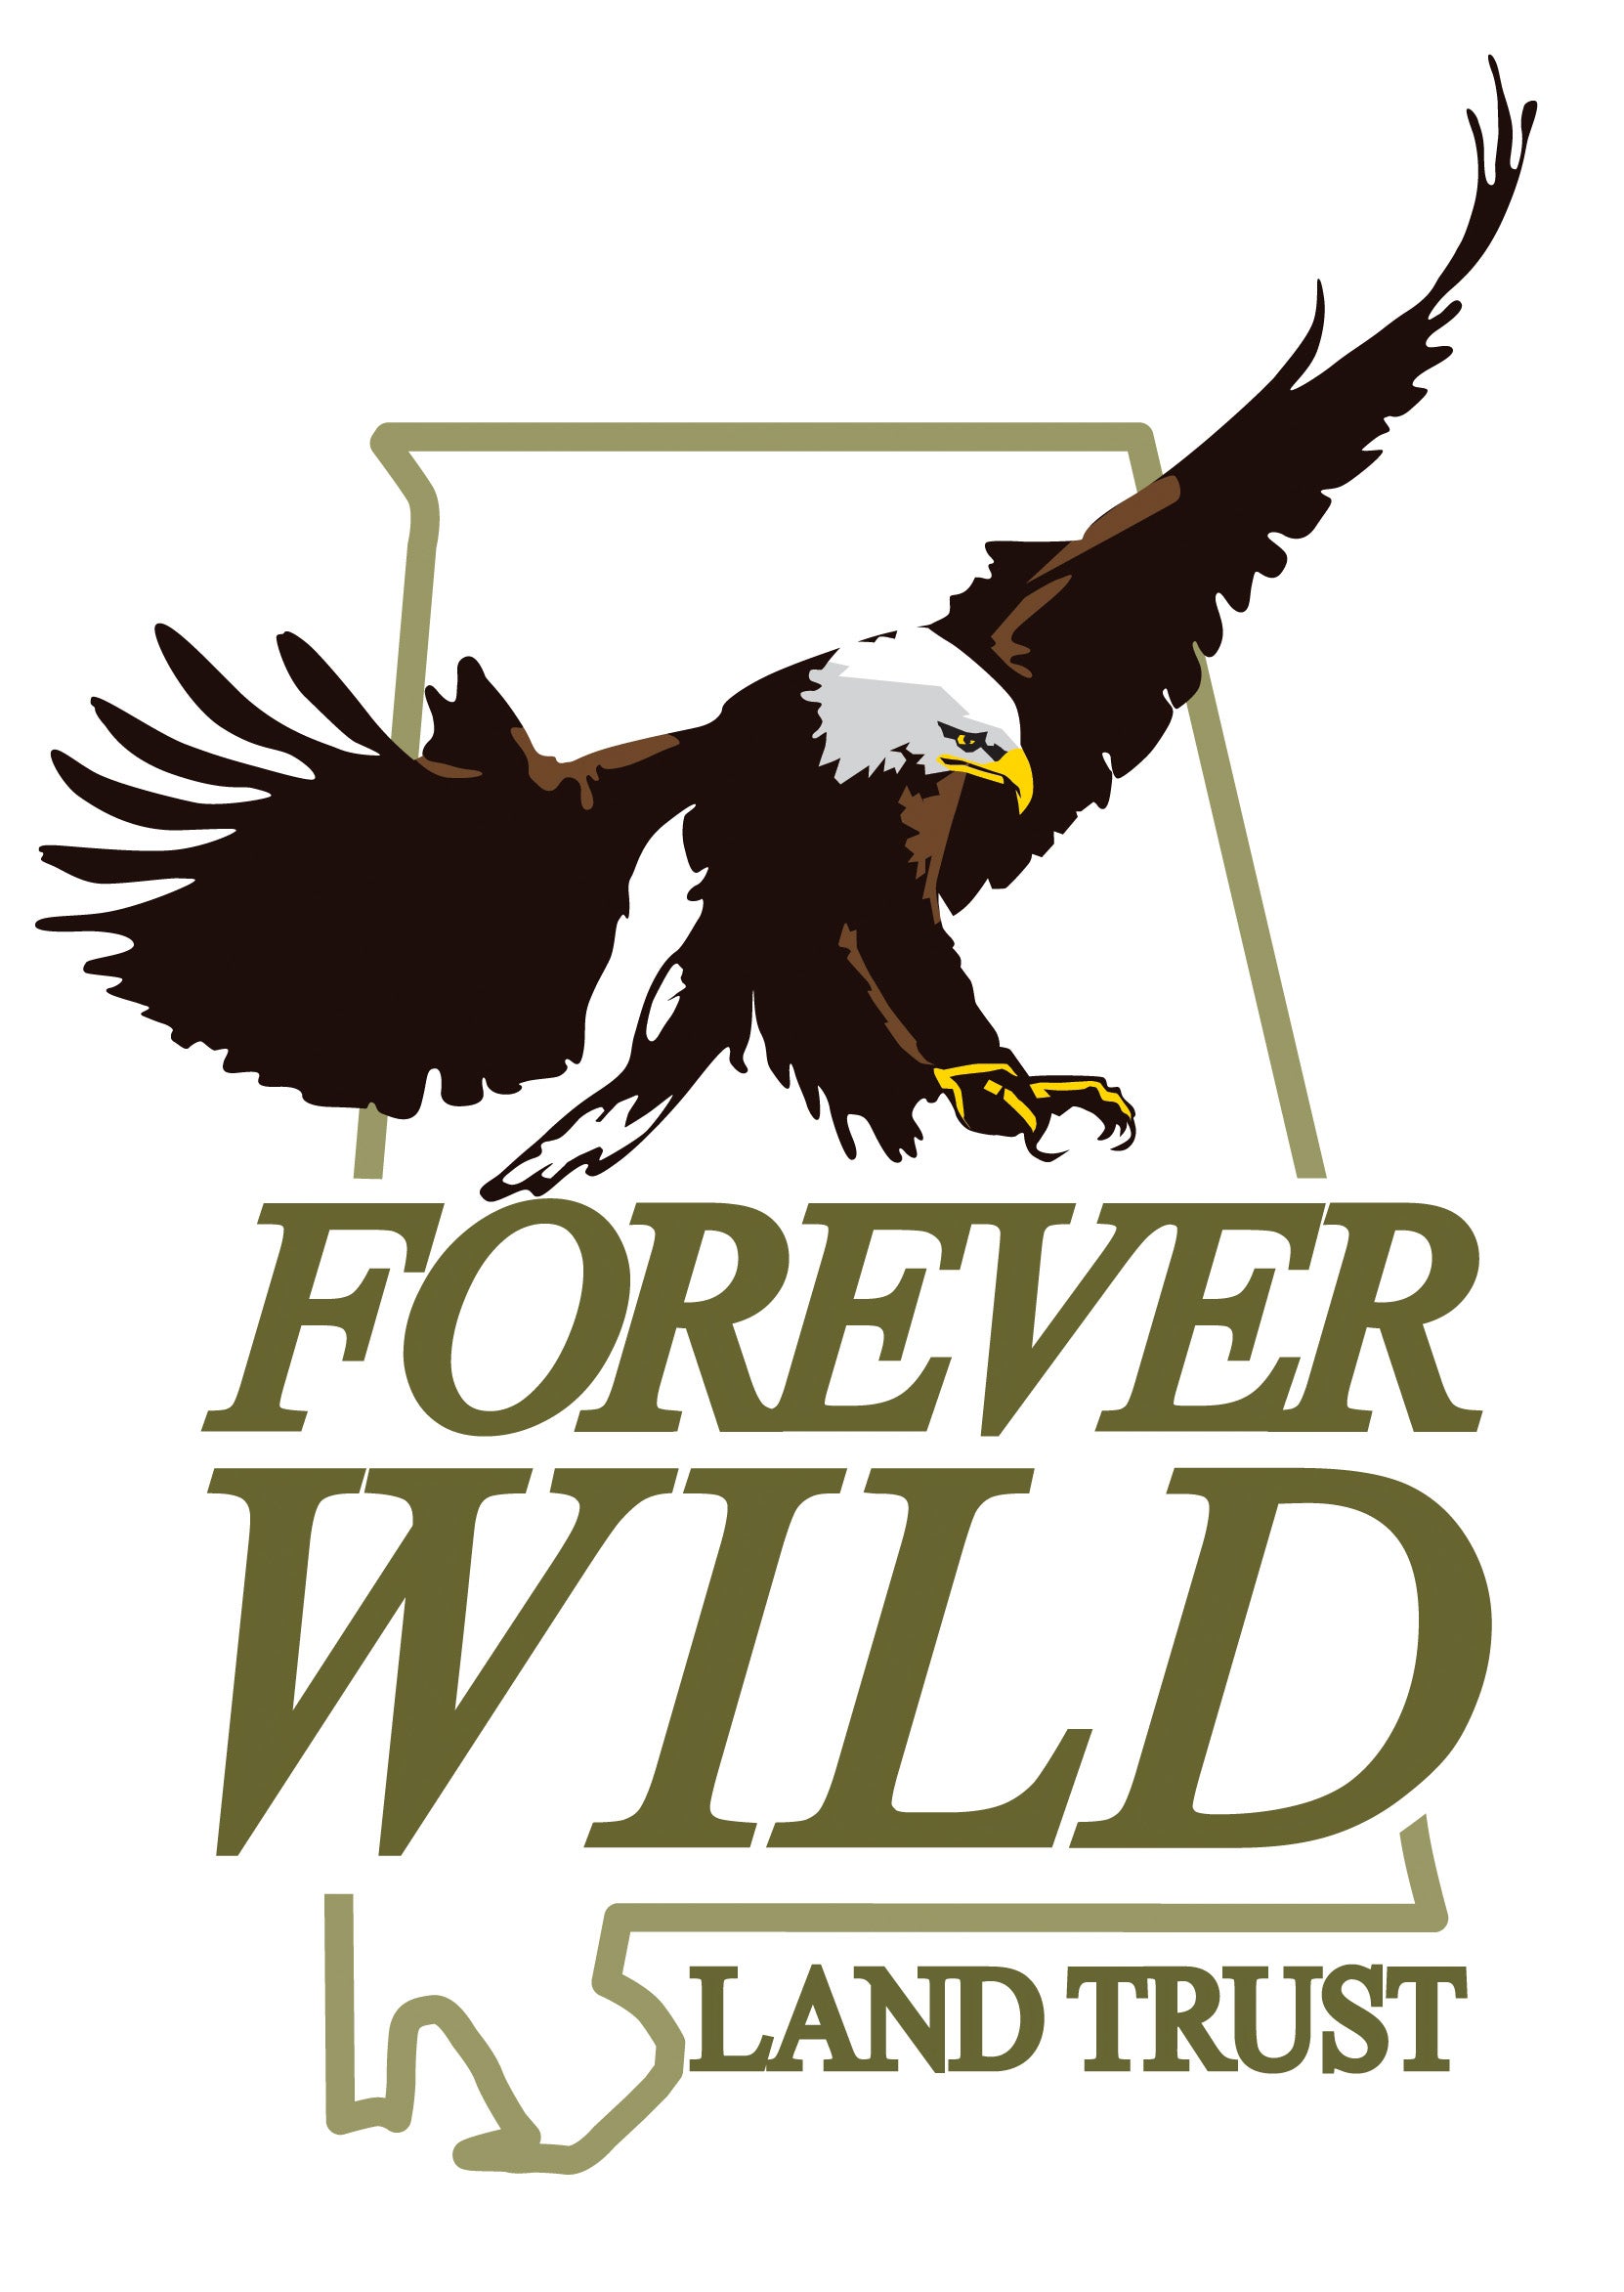 Forever Wild Board Meets in Auburn November 2